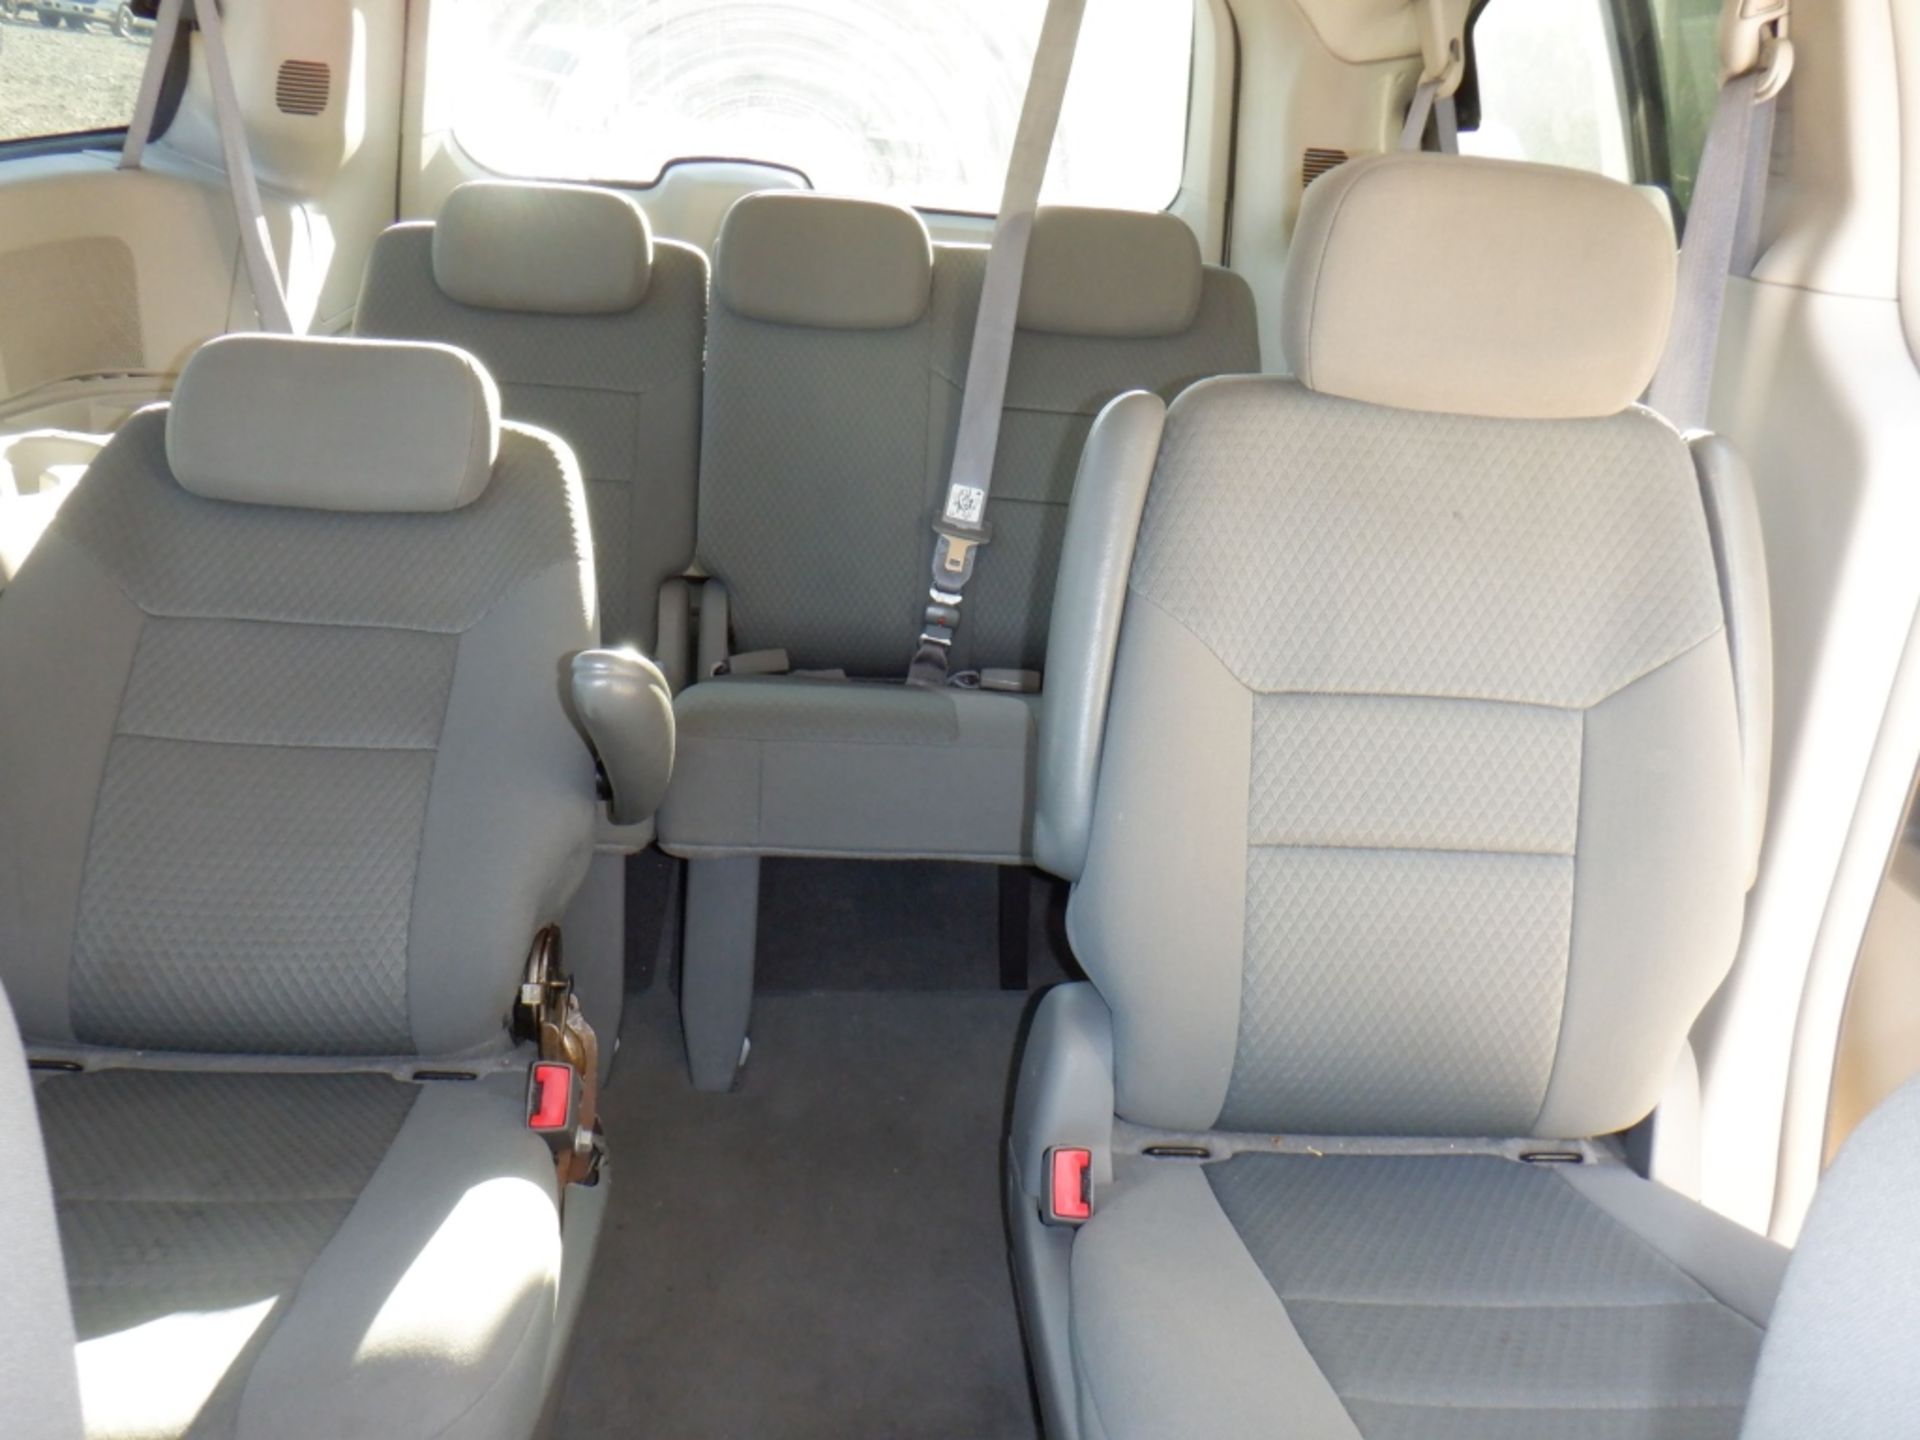 2010 Chrysler Town & Country LX Mini Van, - Image 19 of 34